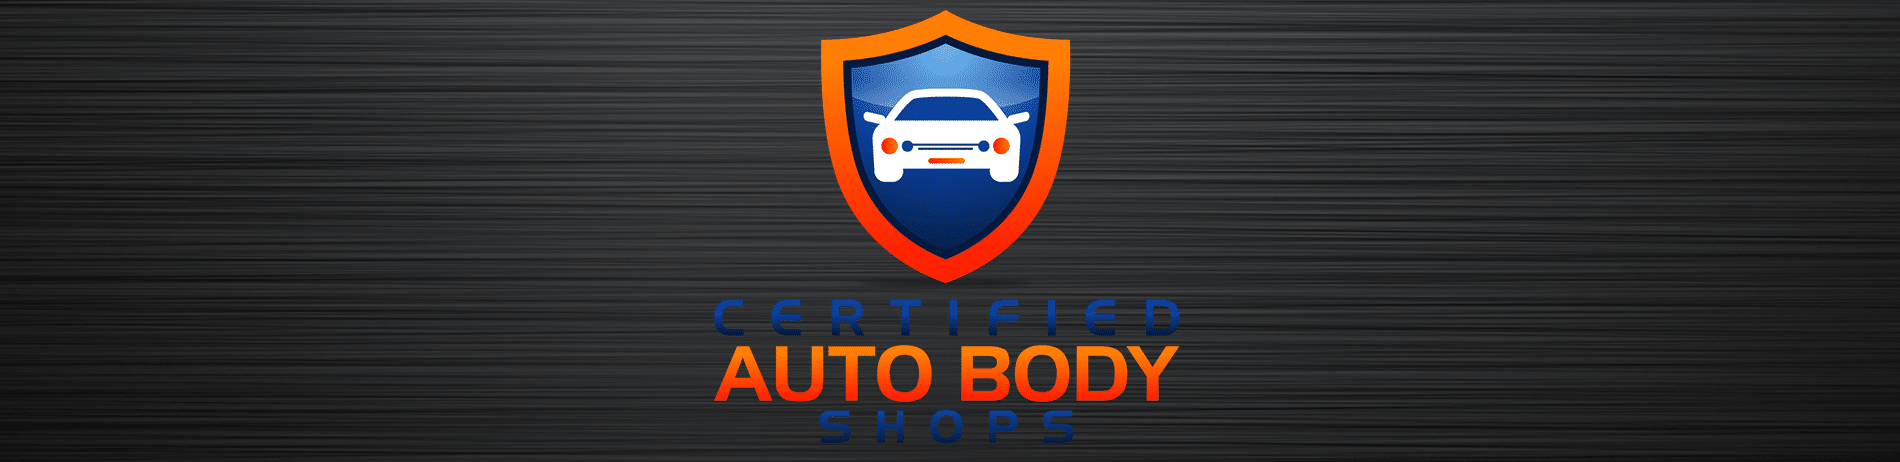 Fiat Certified auto body shop